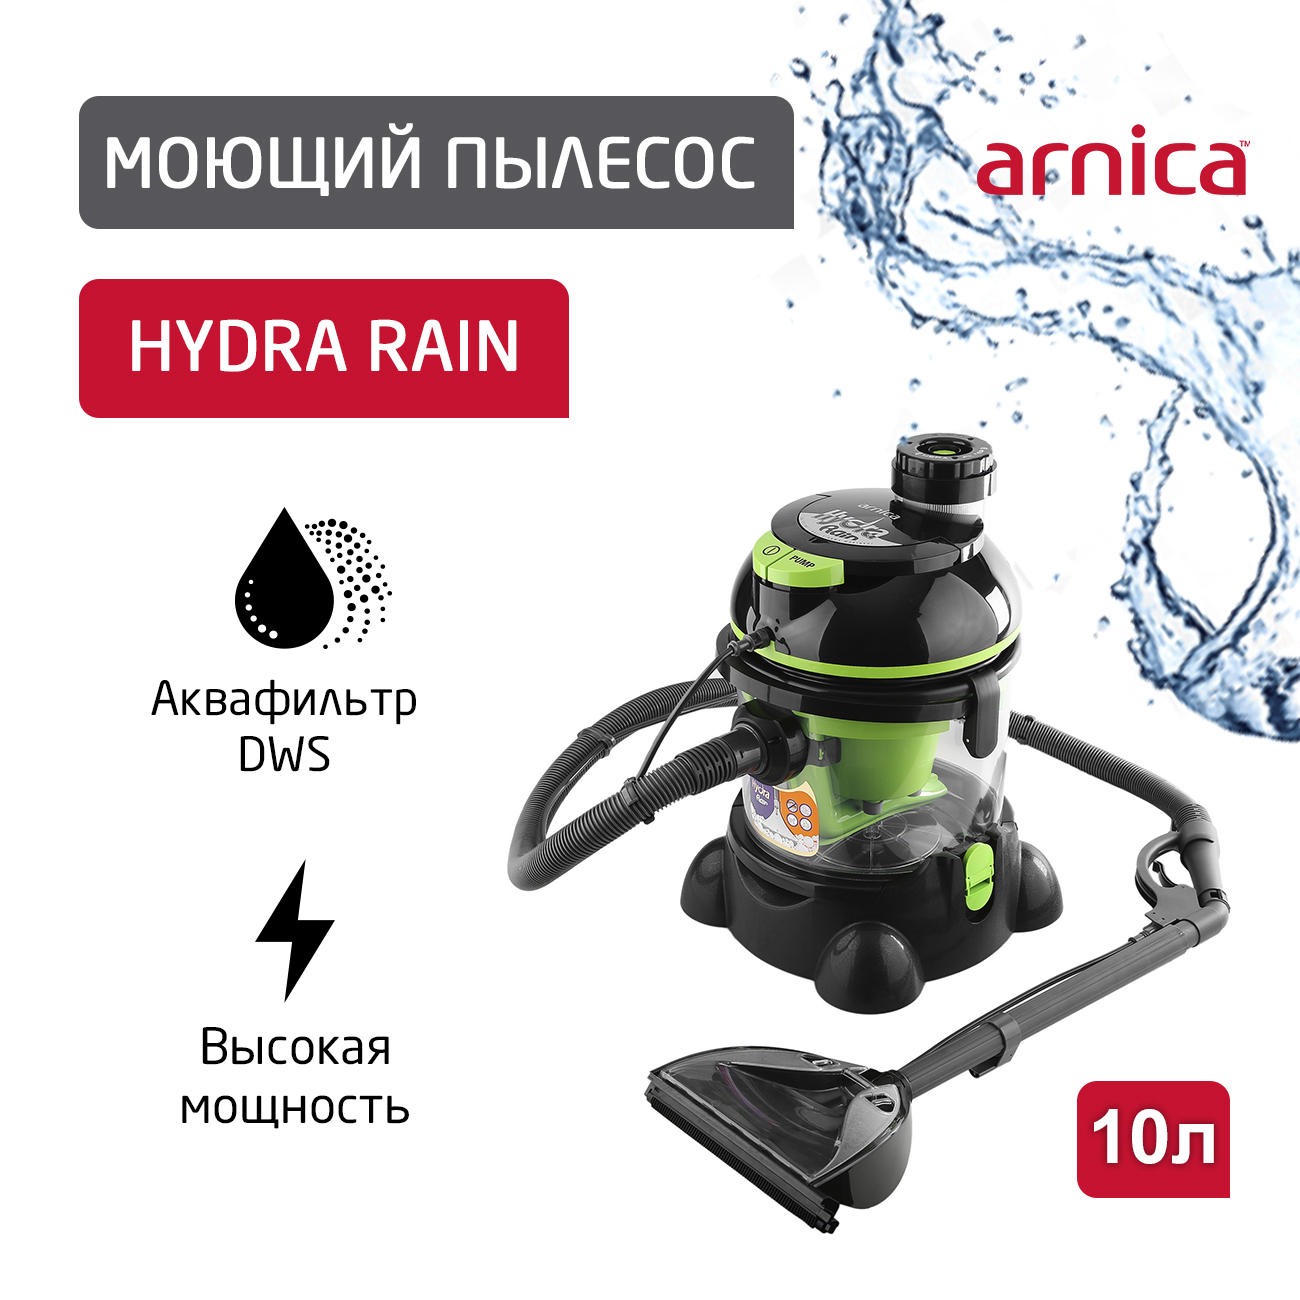 Пылесос ARNICA Hydra Rain зеленый, черный пылесос моющий arnica hydra rain arn 001 g